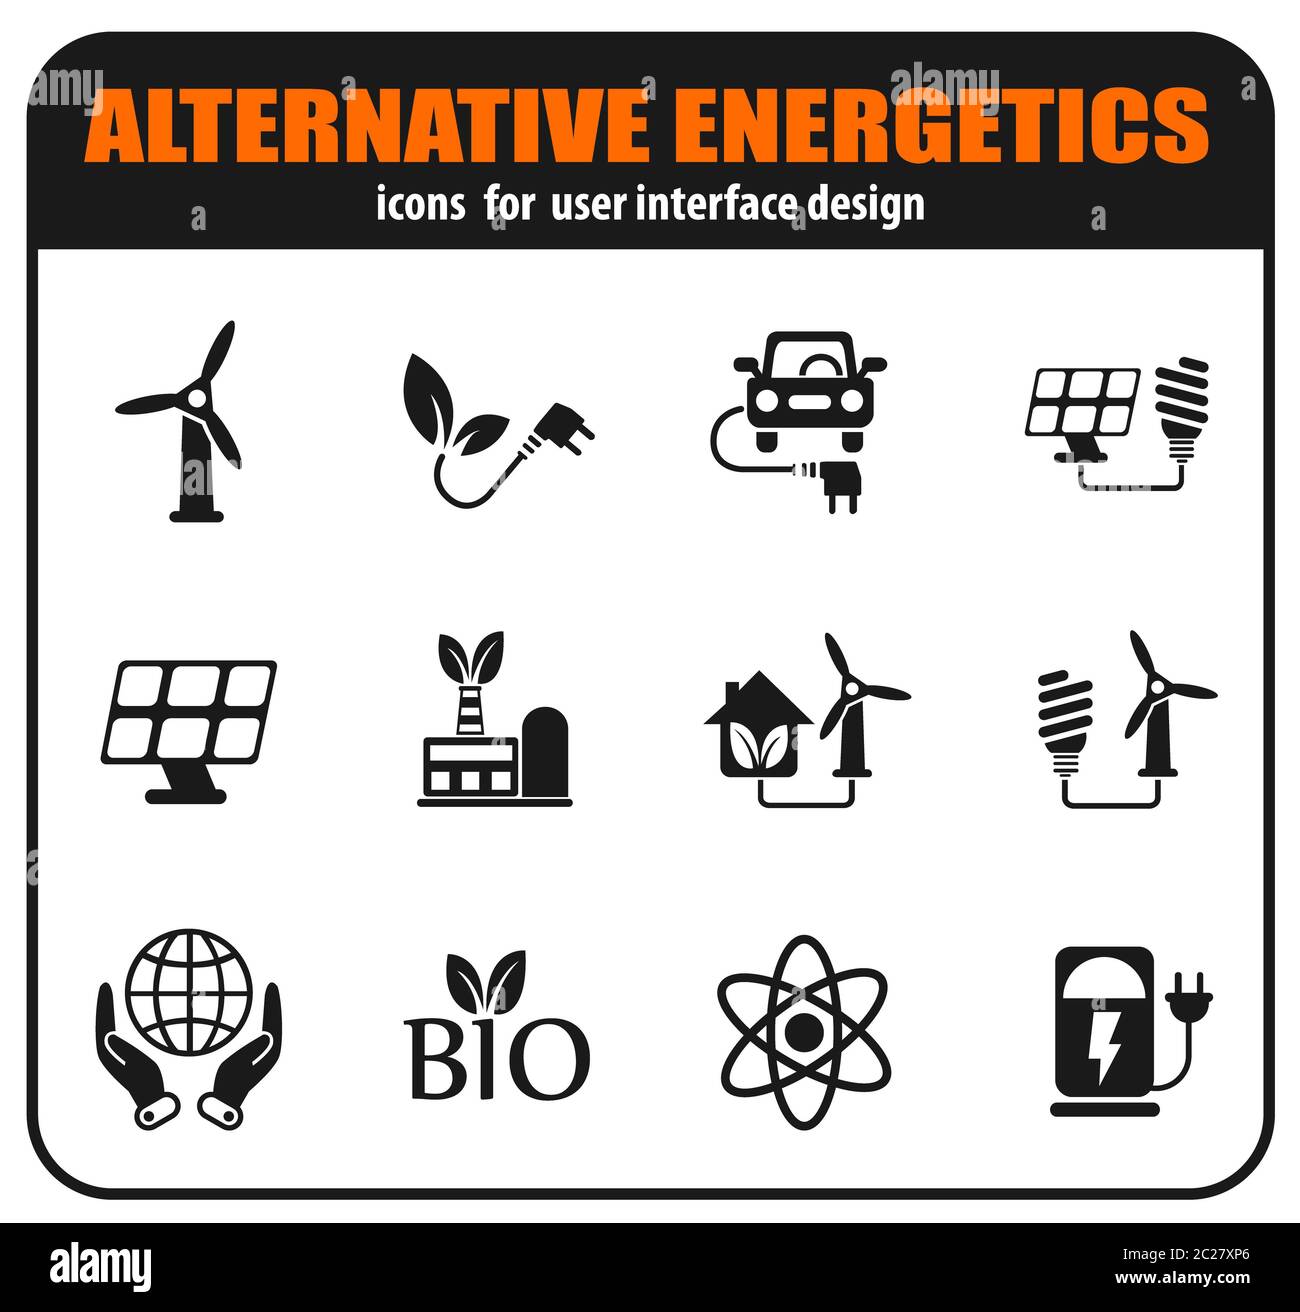 Alternative energetics icons set for user interface design Stock Photo